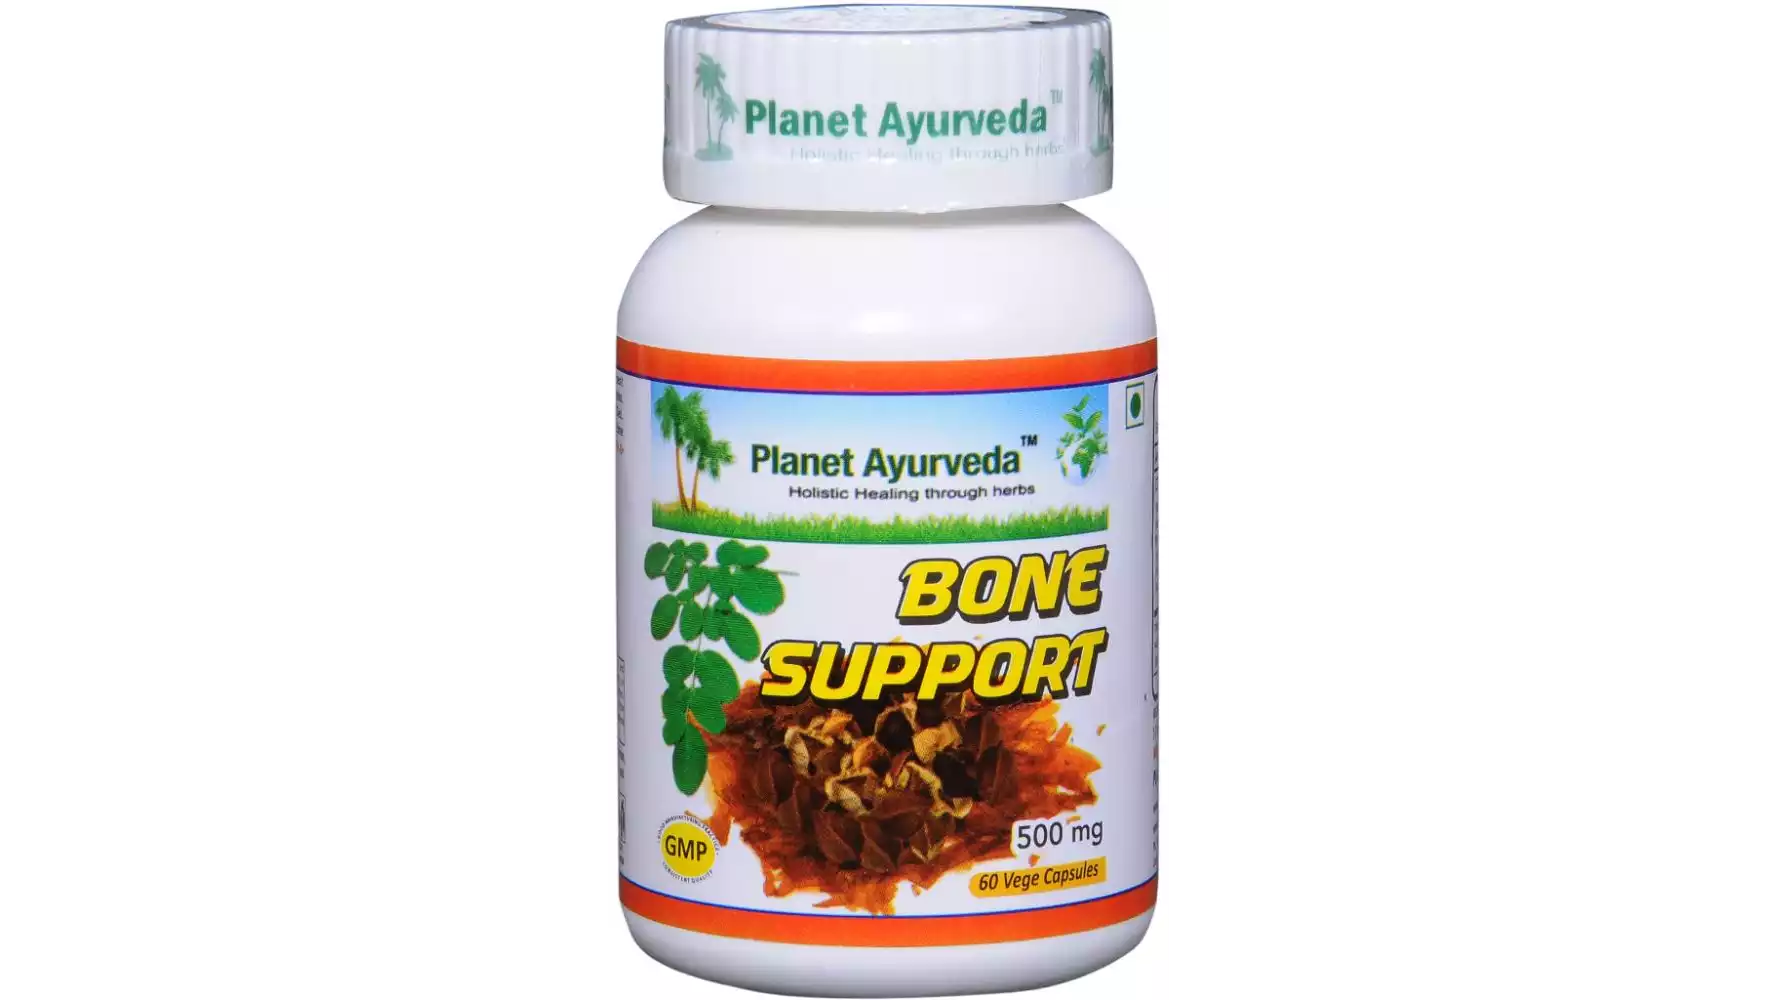 Planet Ayurveda Bone Support Capsule (60caps)